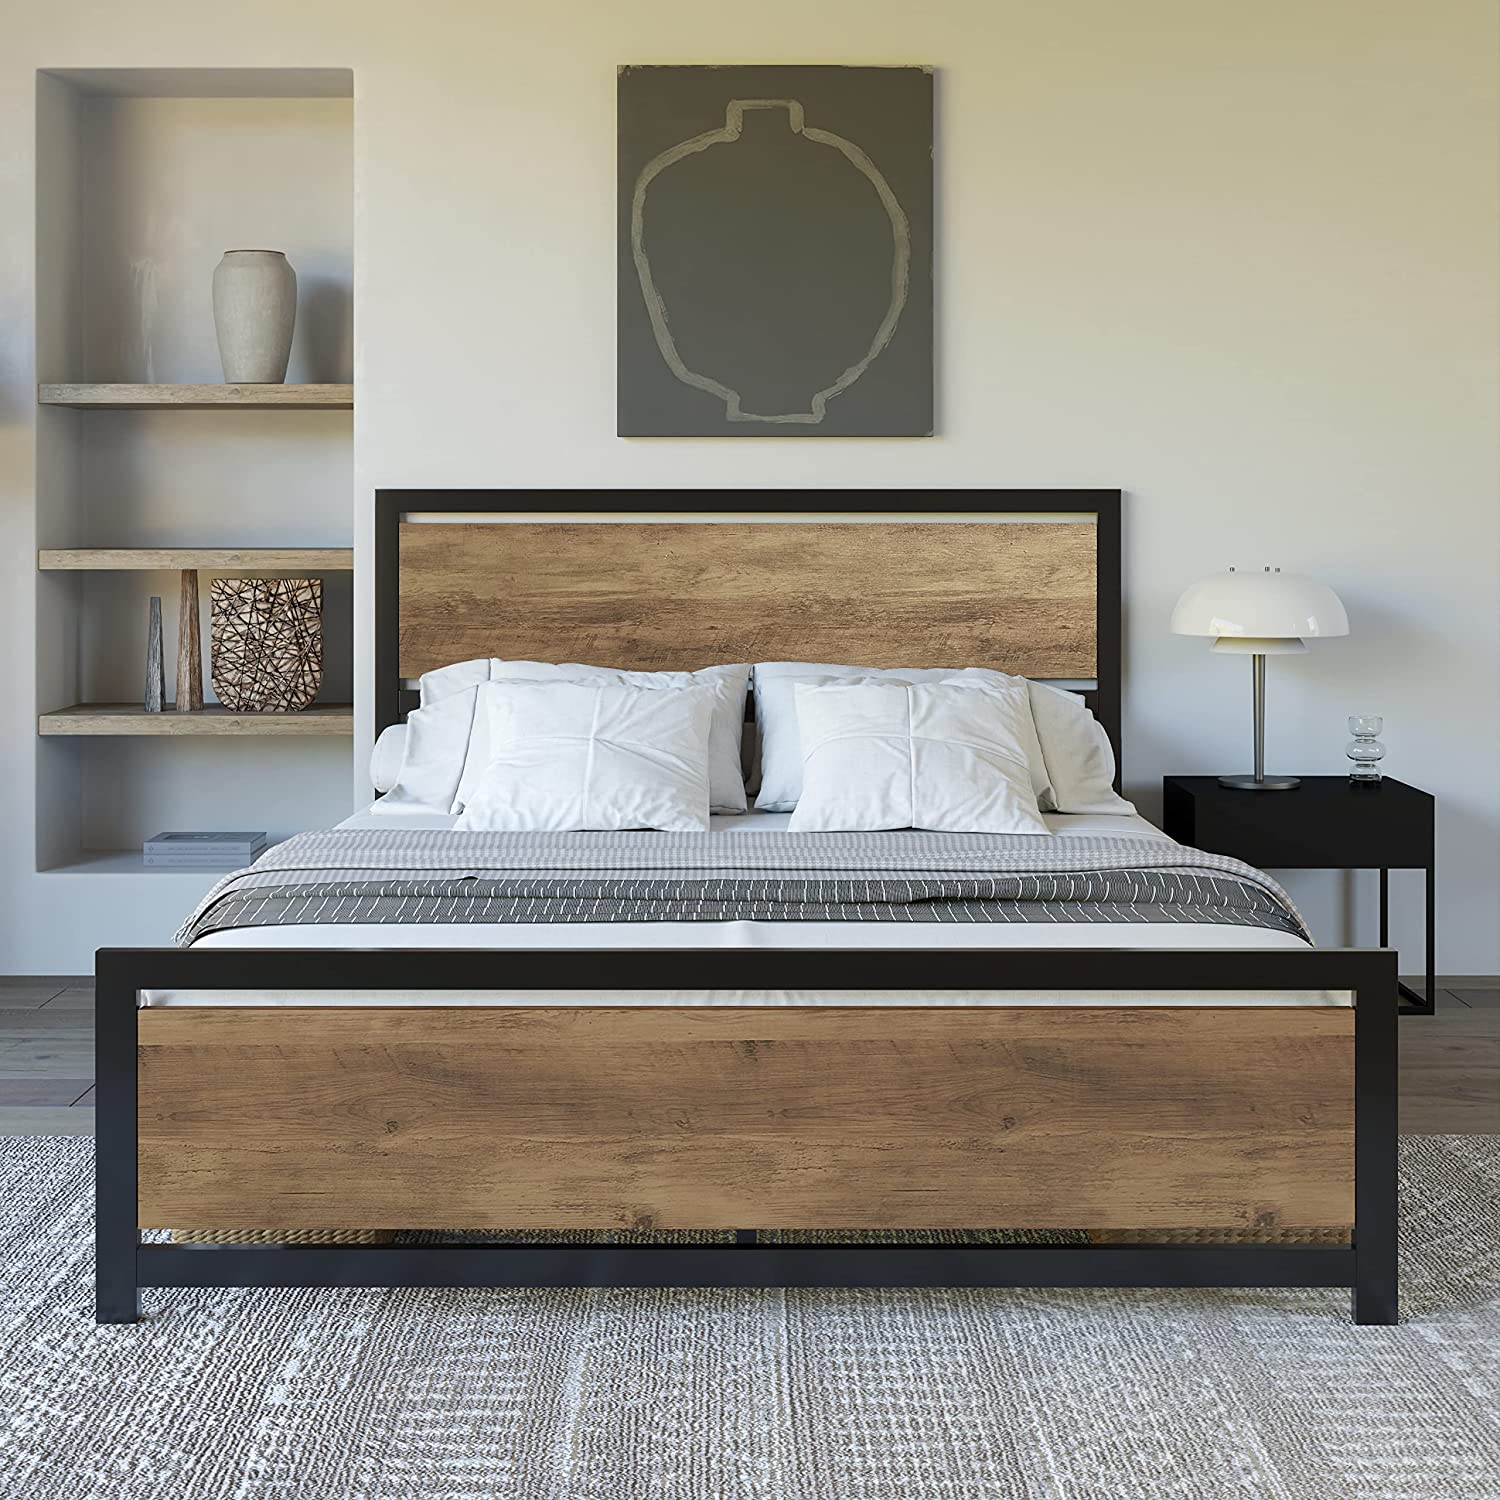 AMERLIFE Queen Size Bed Frame with Wooden Headboard Queen Platform Bed ...